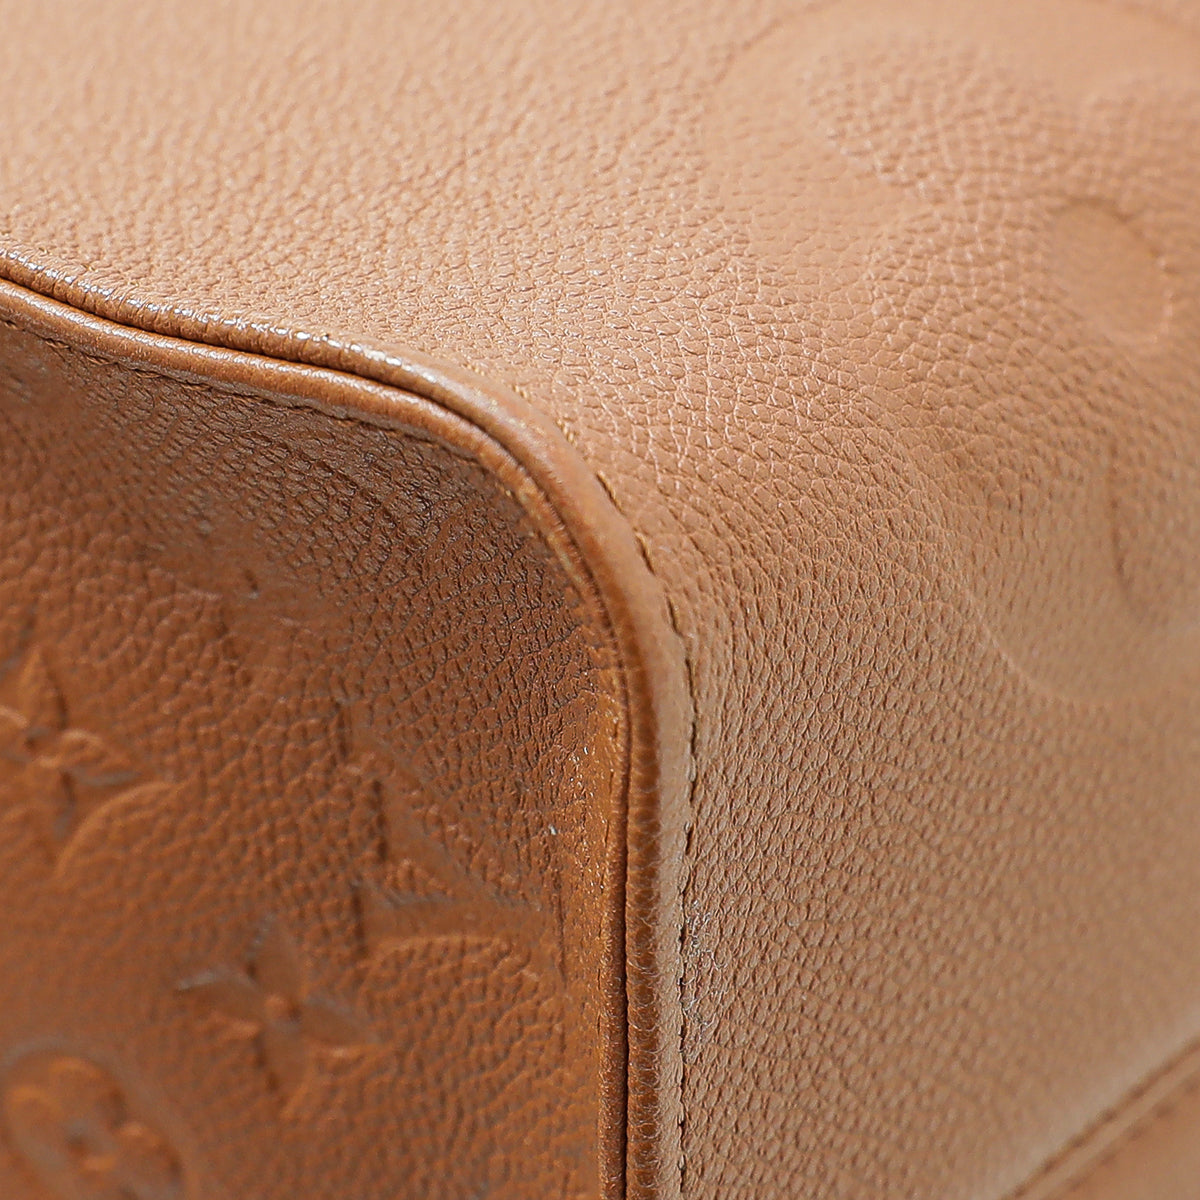 NWT Louis Vuitton On-The-Go Gm Size Bag Cognac OTG TOTE Handbag